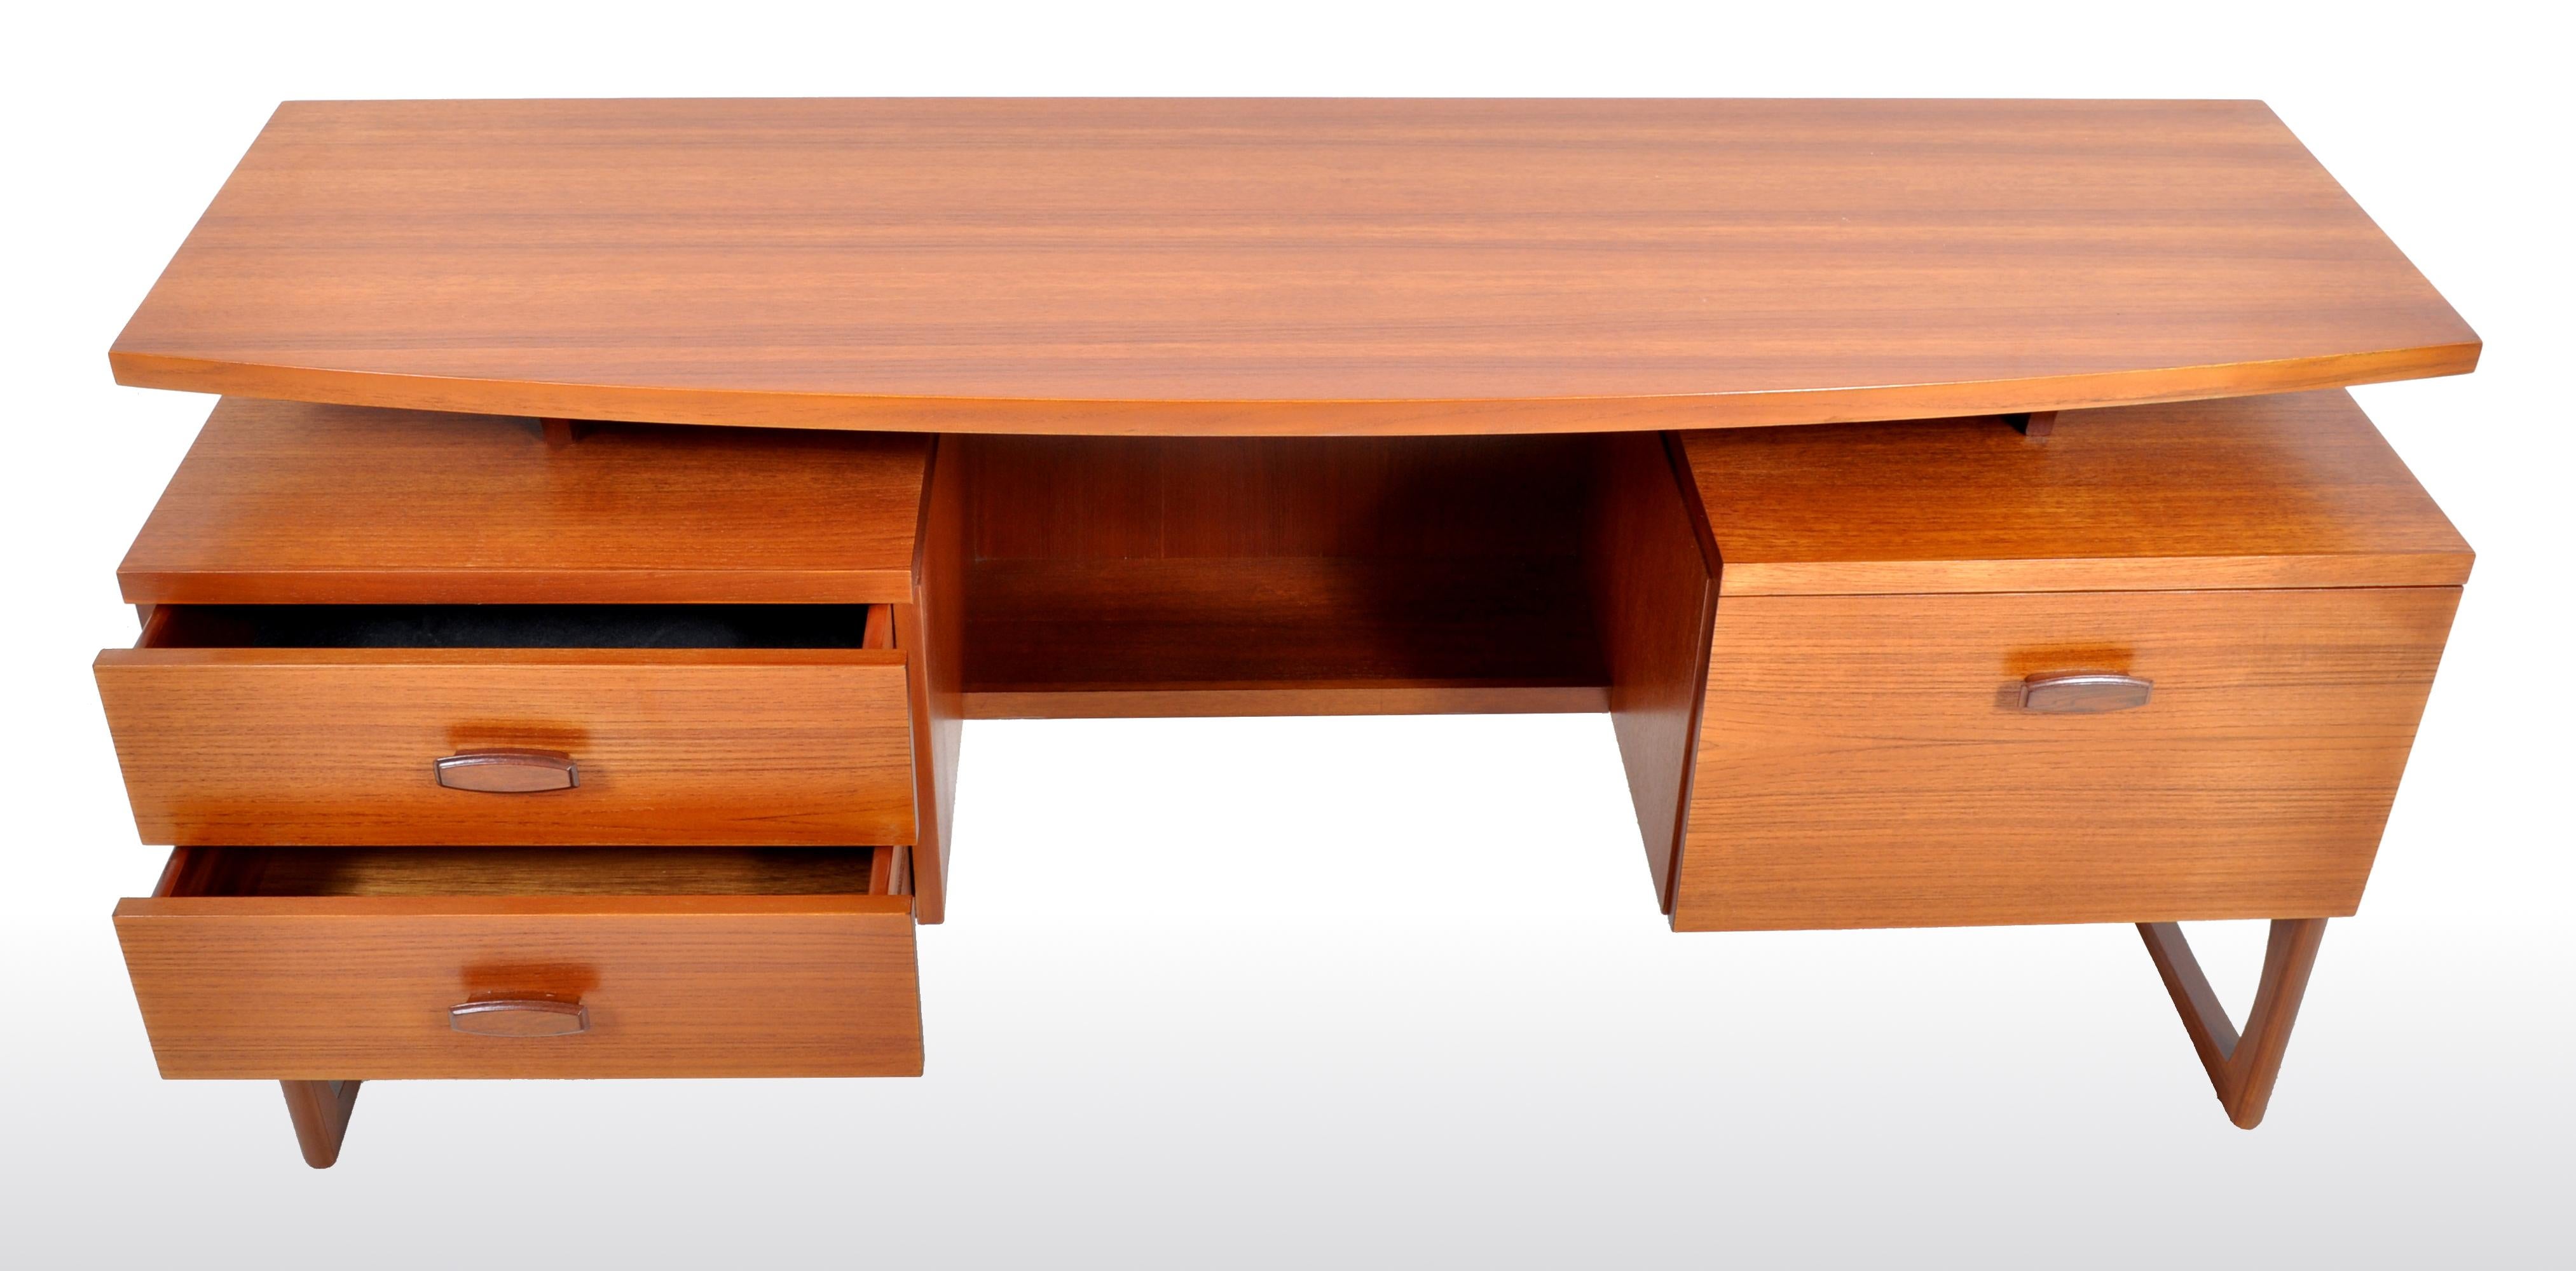 20th Century Mid-Century Modern Danish Style Teak Desk by Ib Kofod-Larsen for G Plan, 1960s